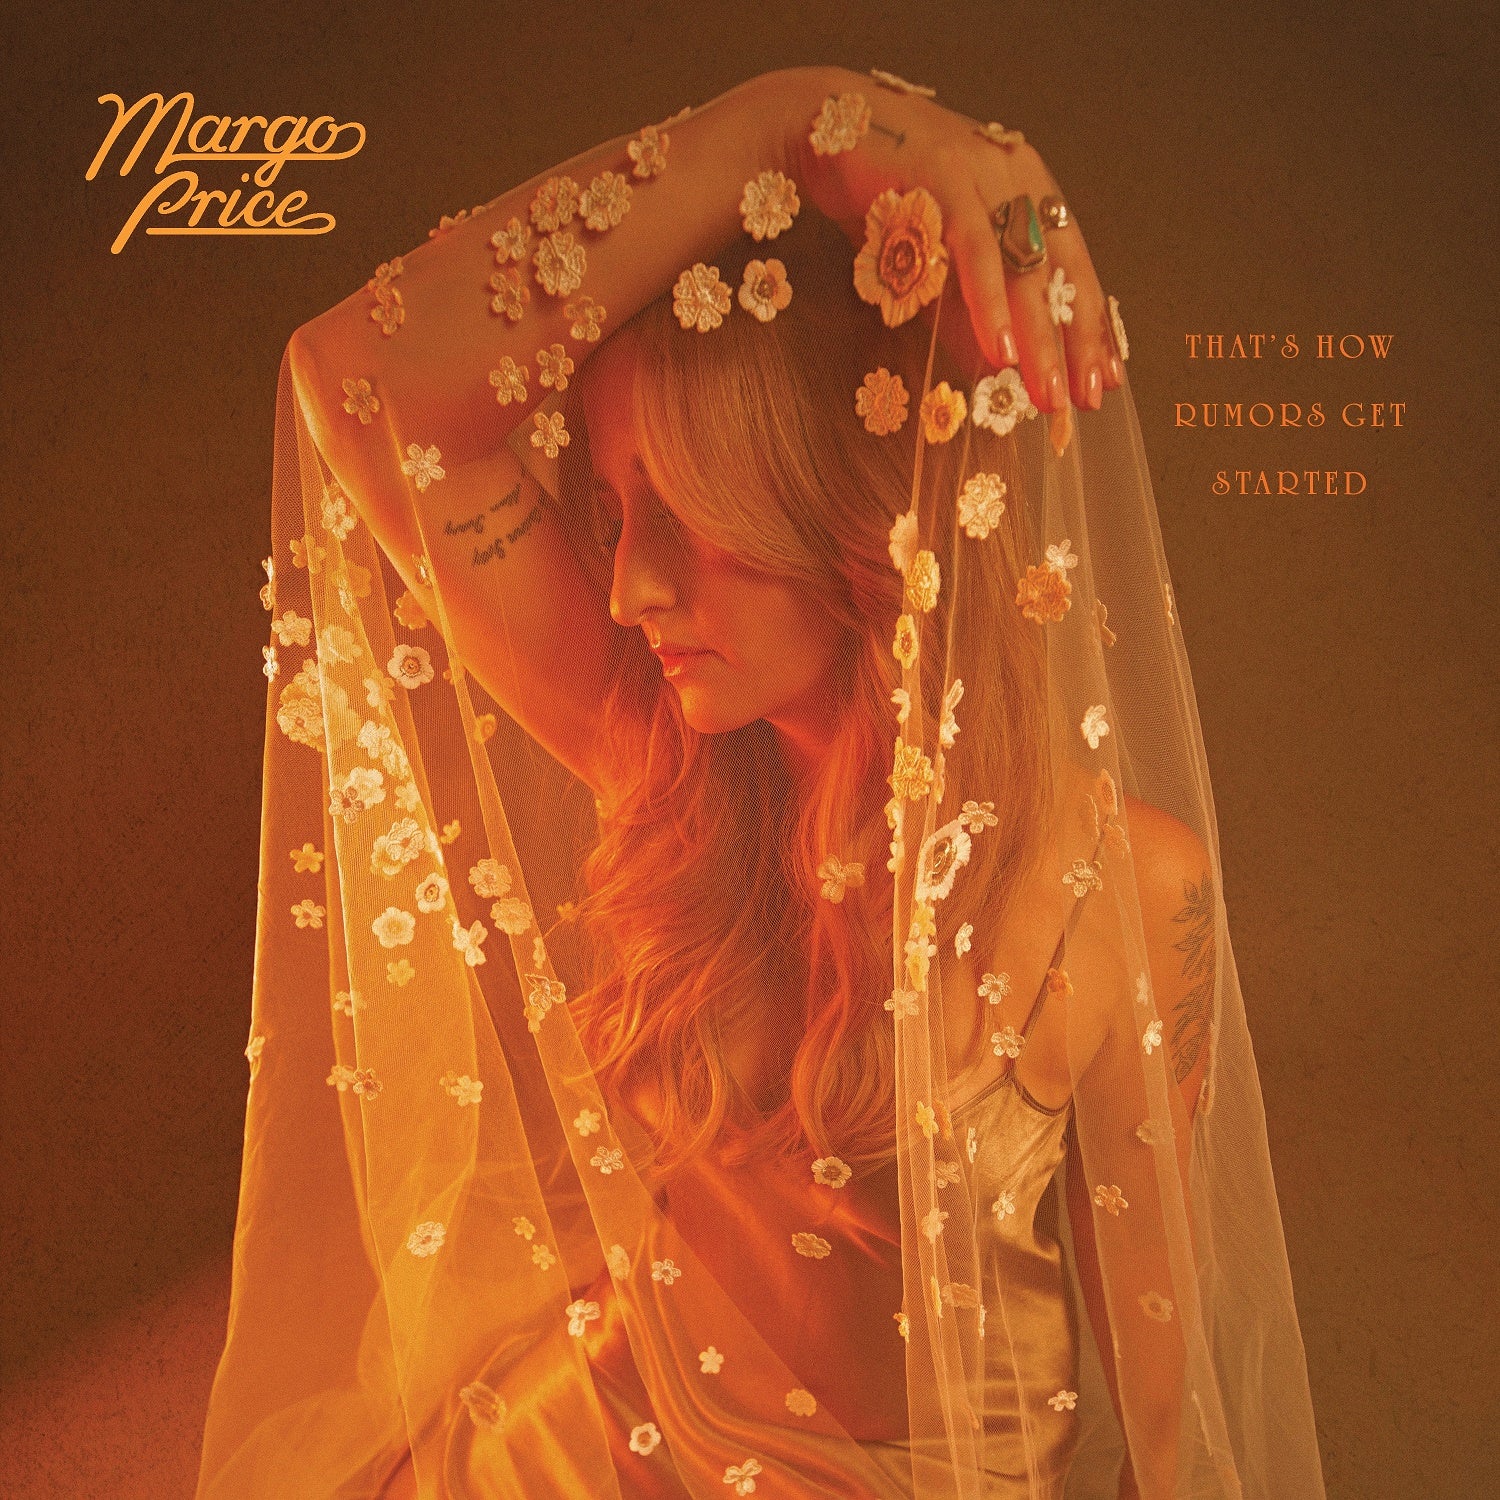 Margo Price | That’s How Rumors Get Started [Sliver LP + 7" Single] | Vinyl